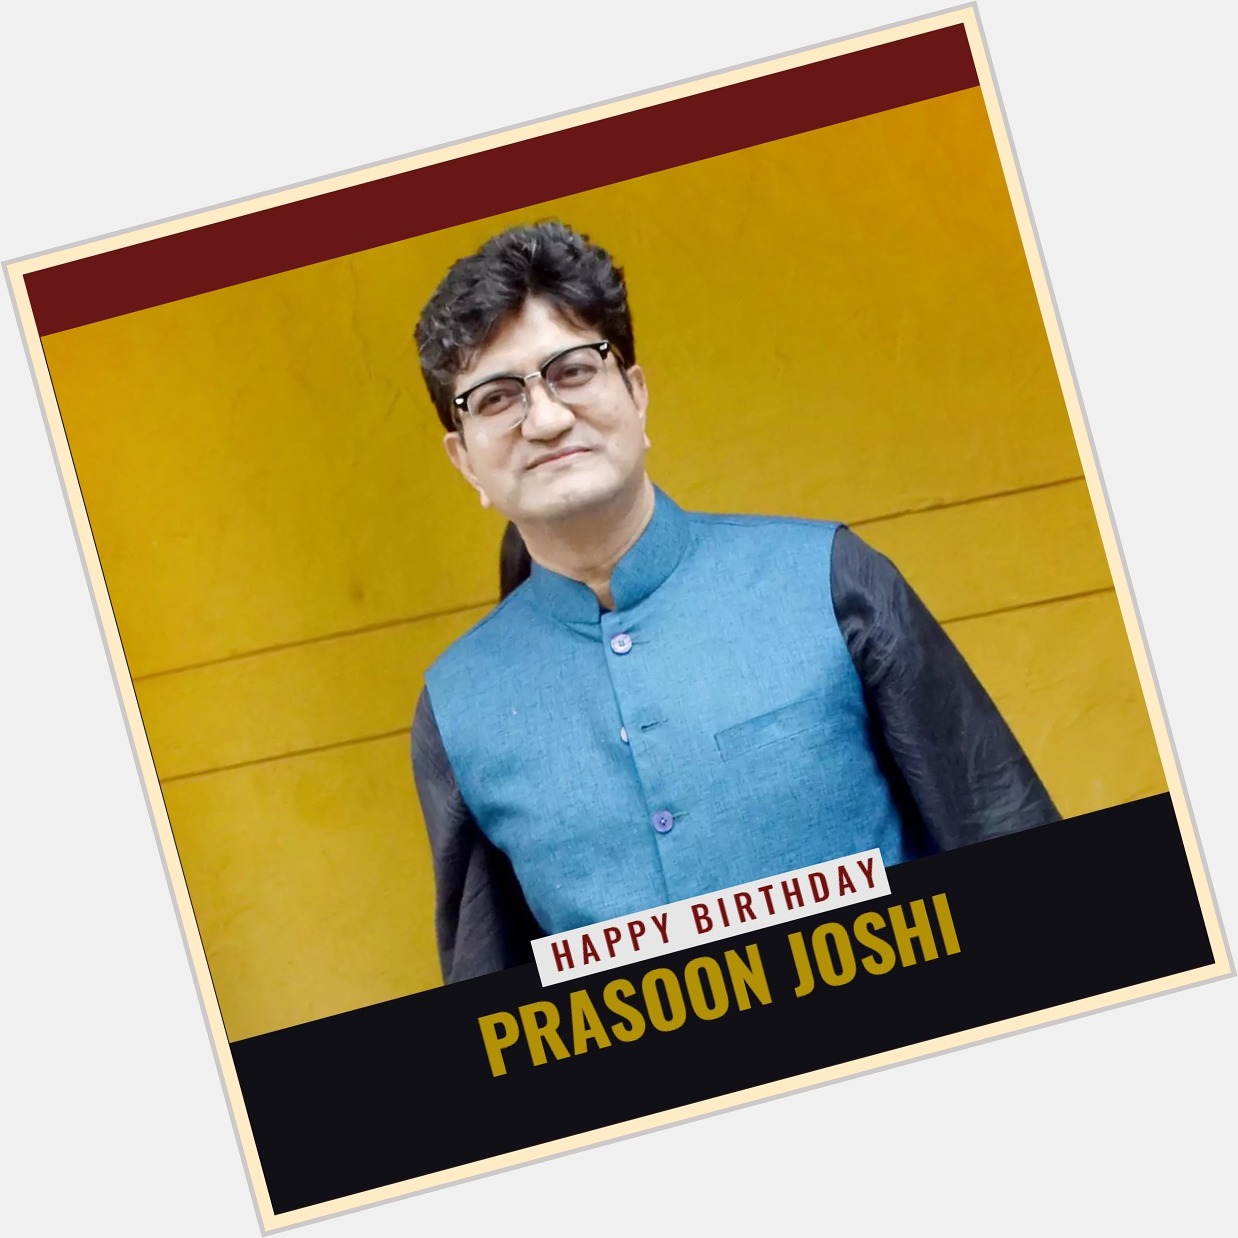 Happy Birthday Prasoon Joshi sir, your work is to be acclaimed for its originality
HappyBirthday PrasoonJoshi 